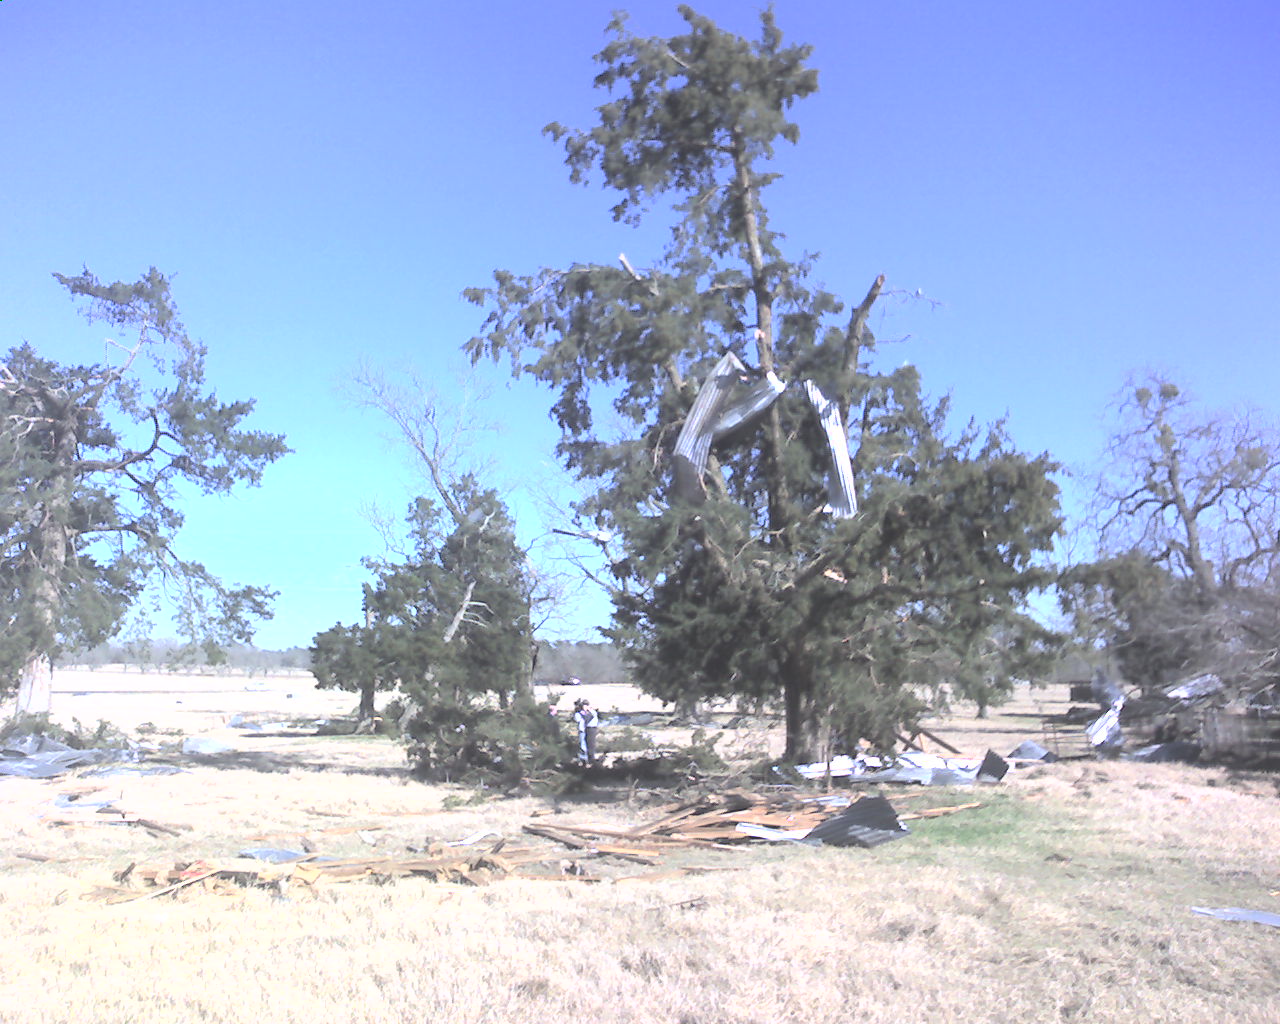 Debris blown into trees